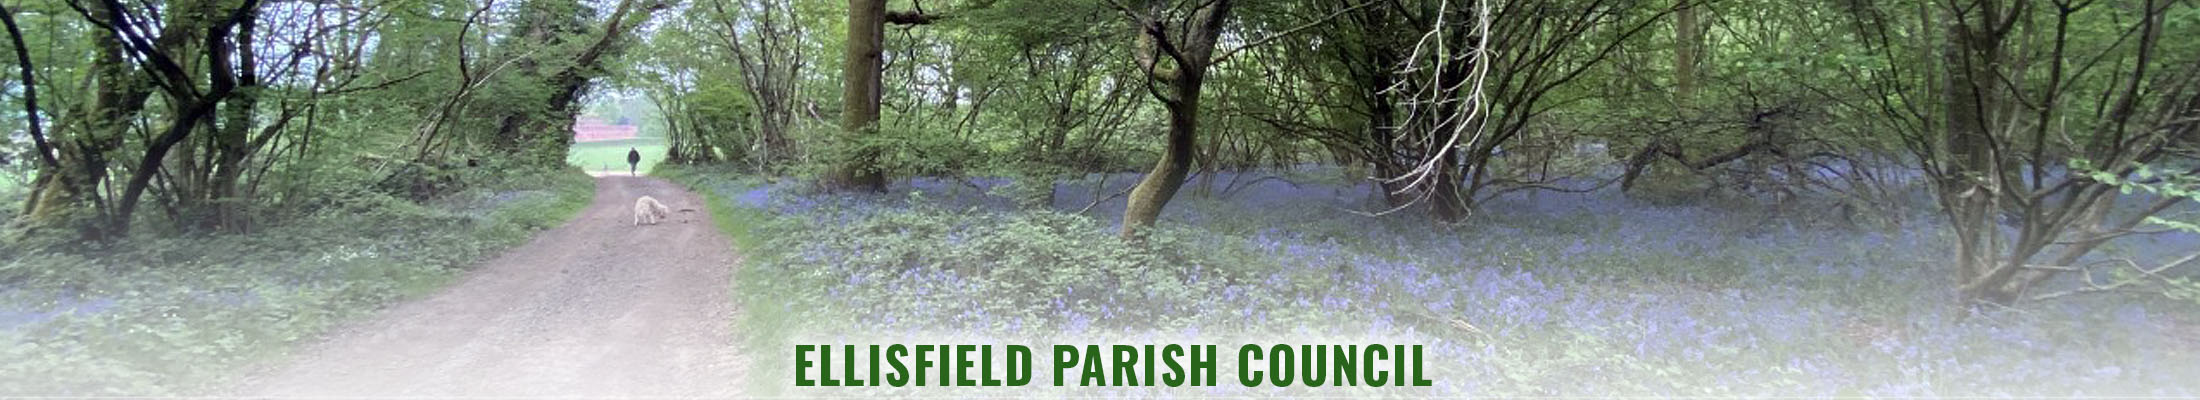 Header Image for Ellisfield Parish Council